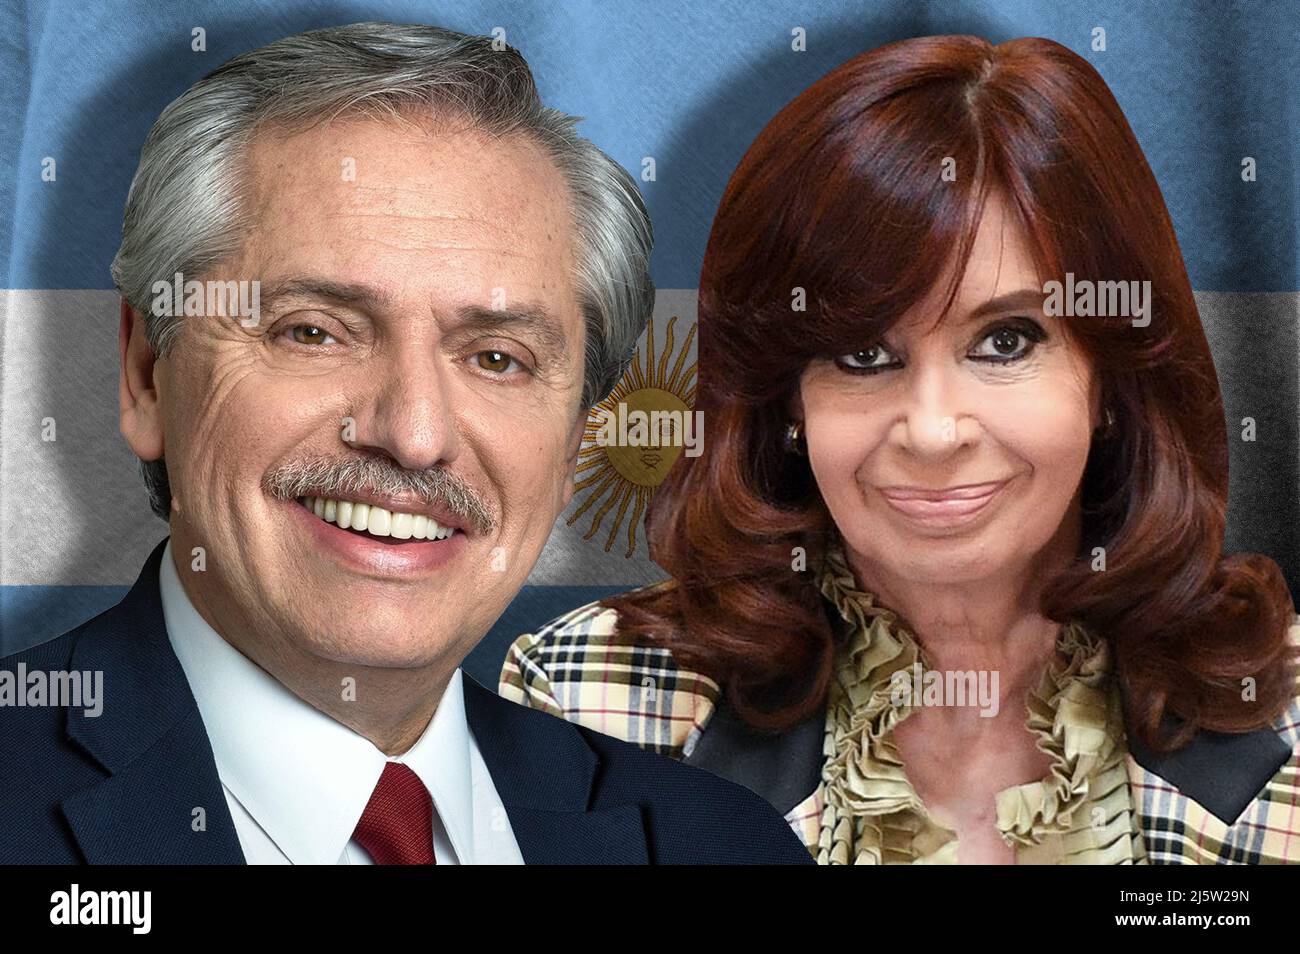 Alberto Fernández, Cristina Fernández de Kirchner and the flag of Argentina Stock Photo